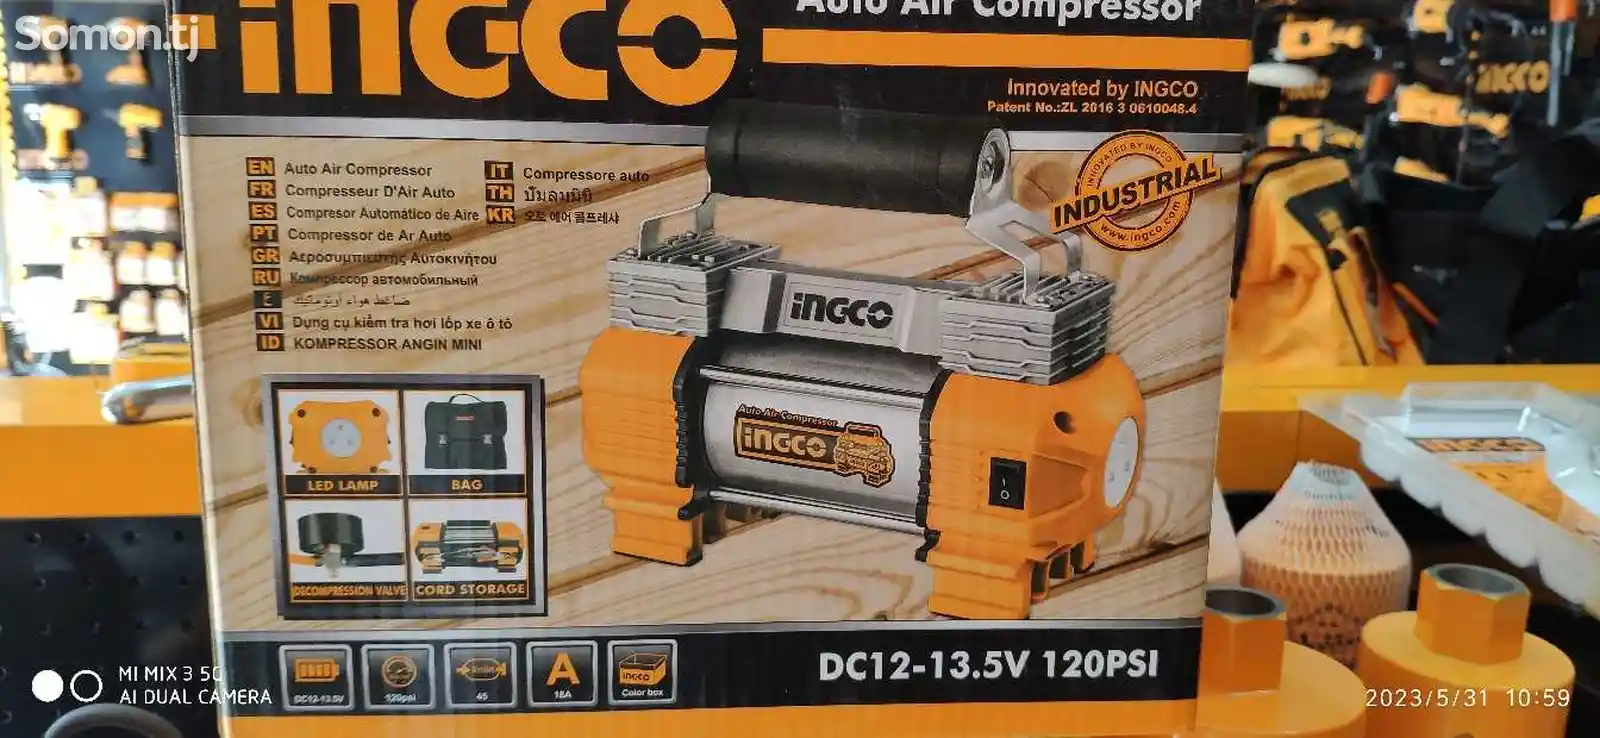 компрессор для шиномонтаж ingcco 18 A-6